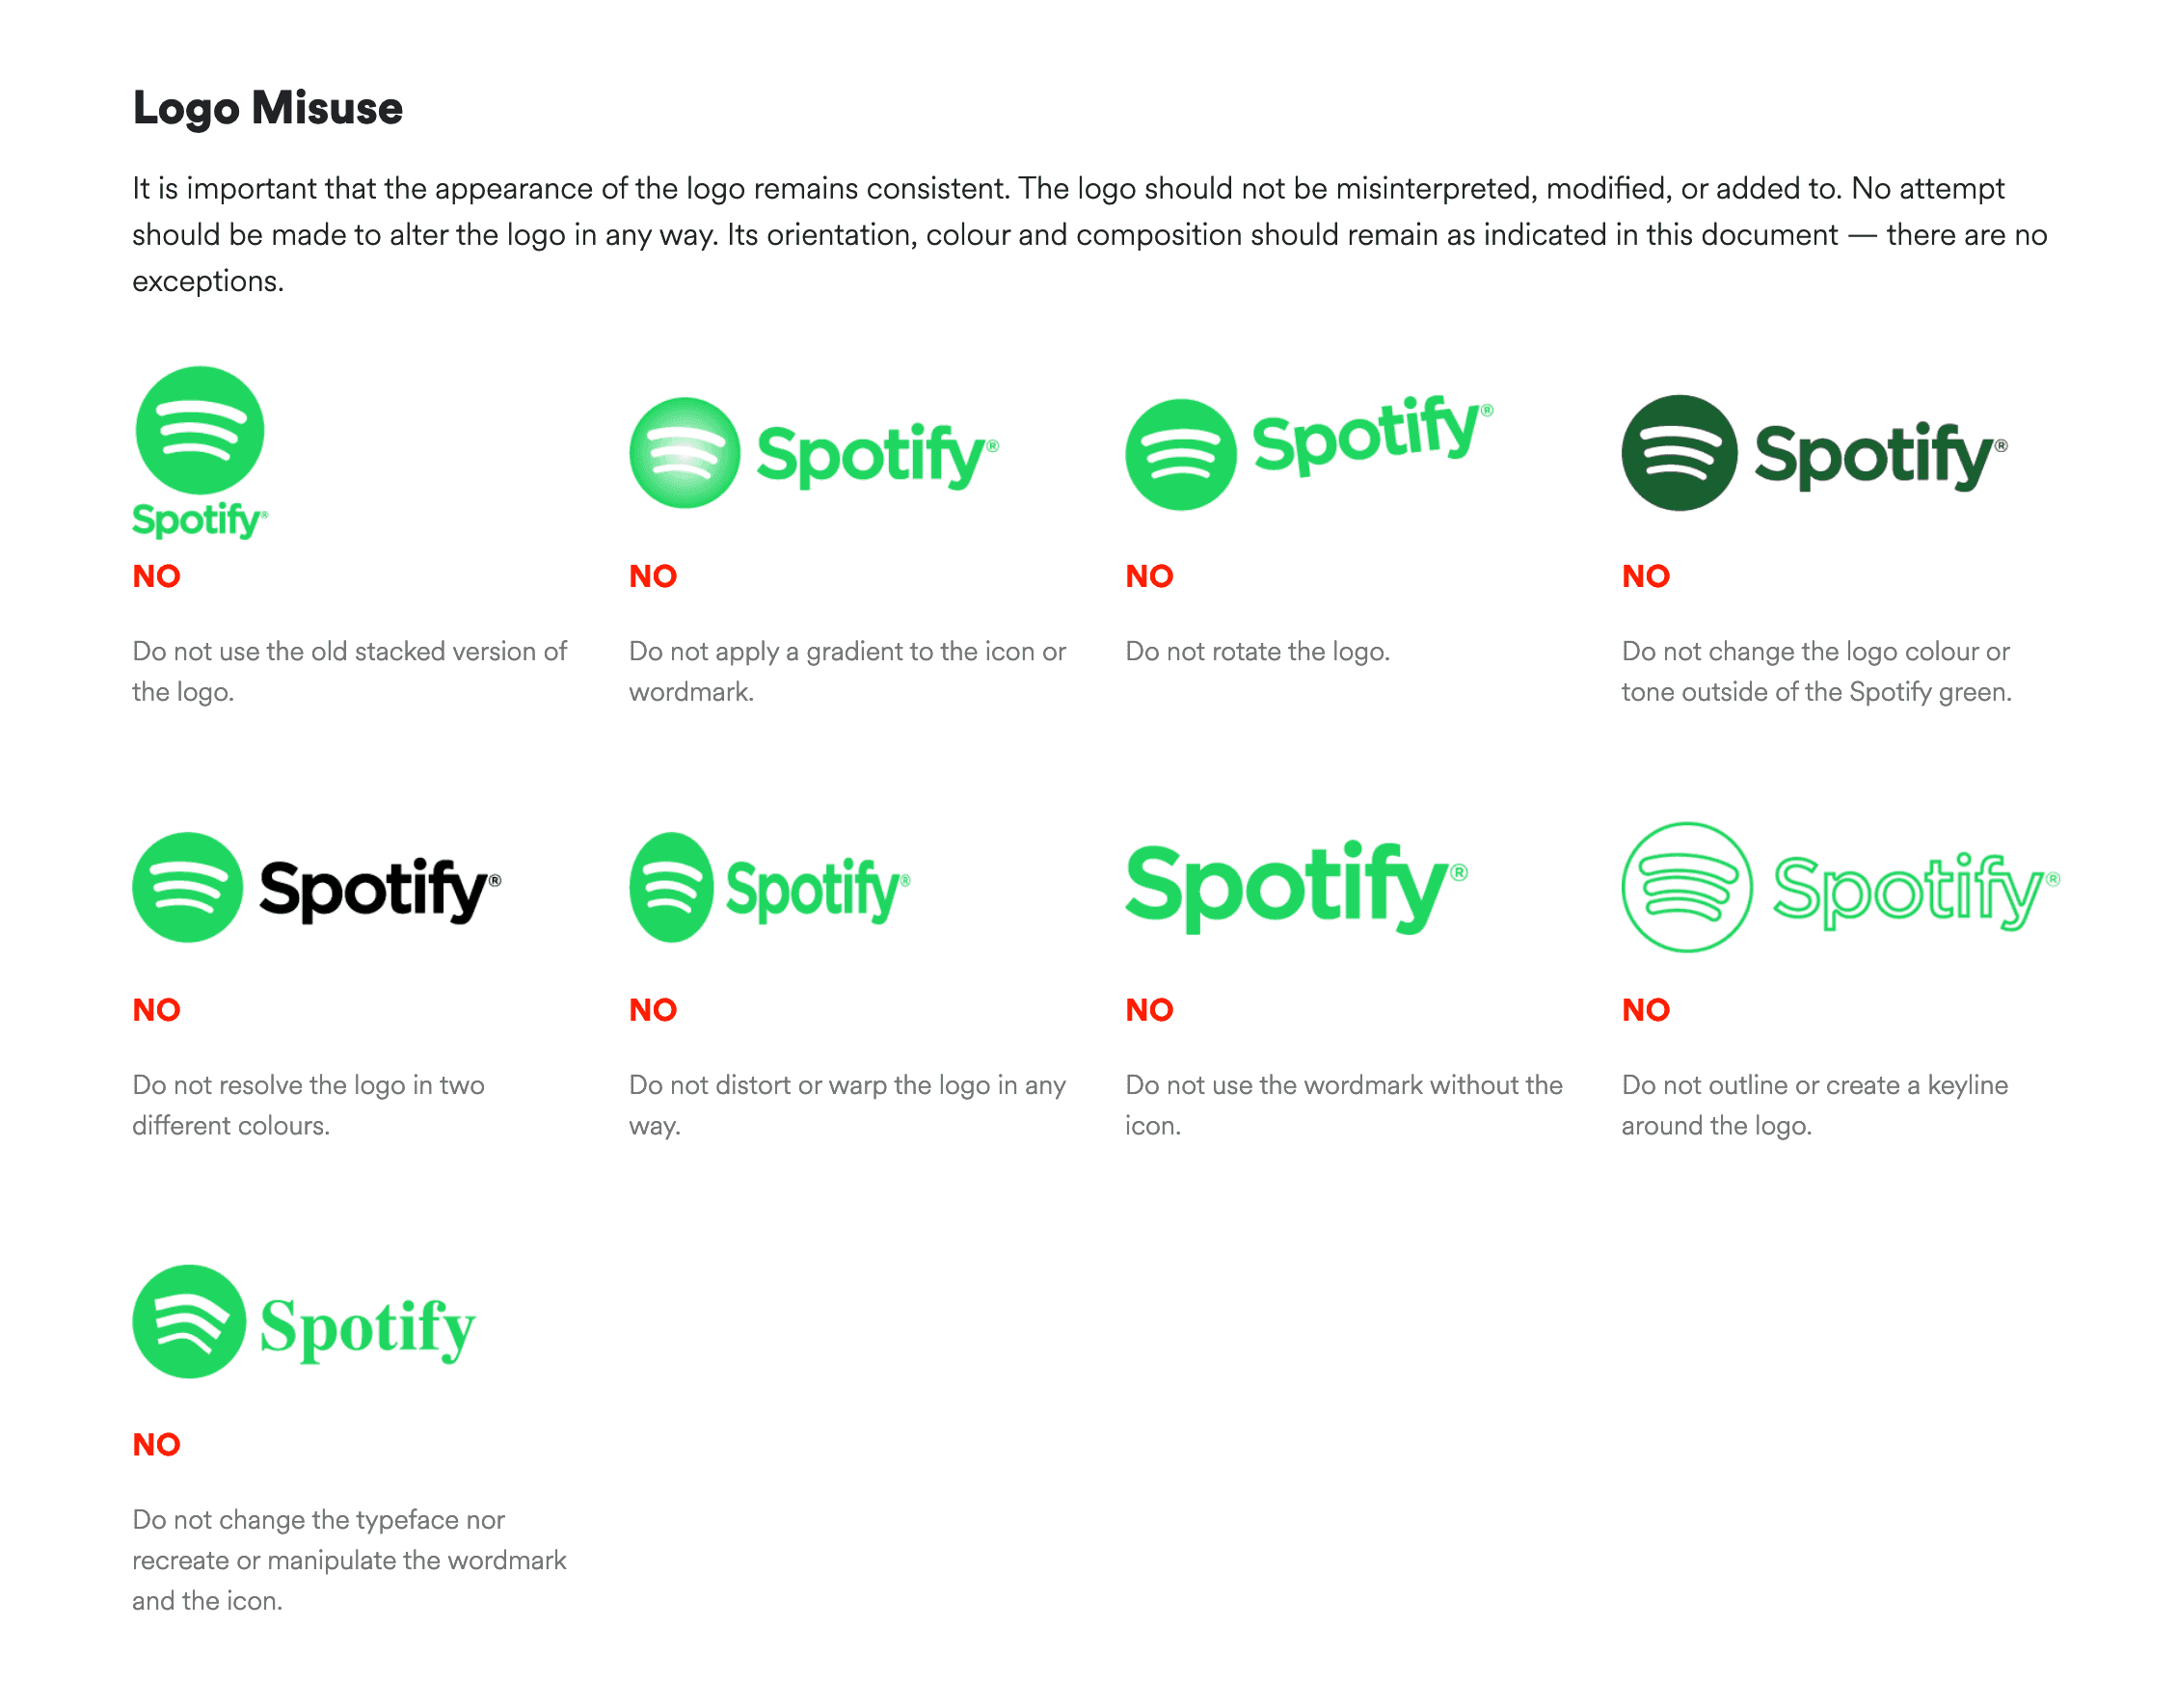 Spotify Logo Misuse